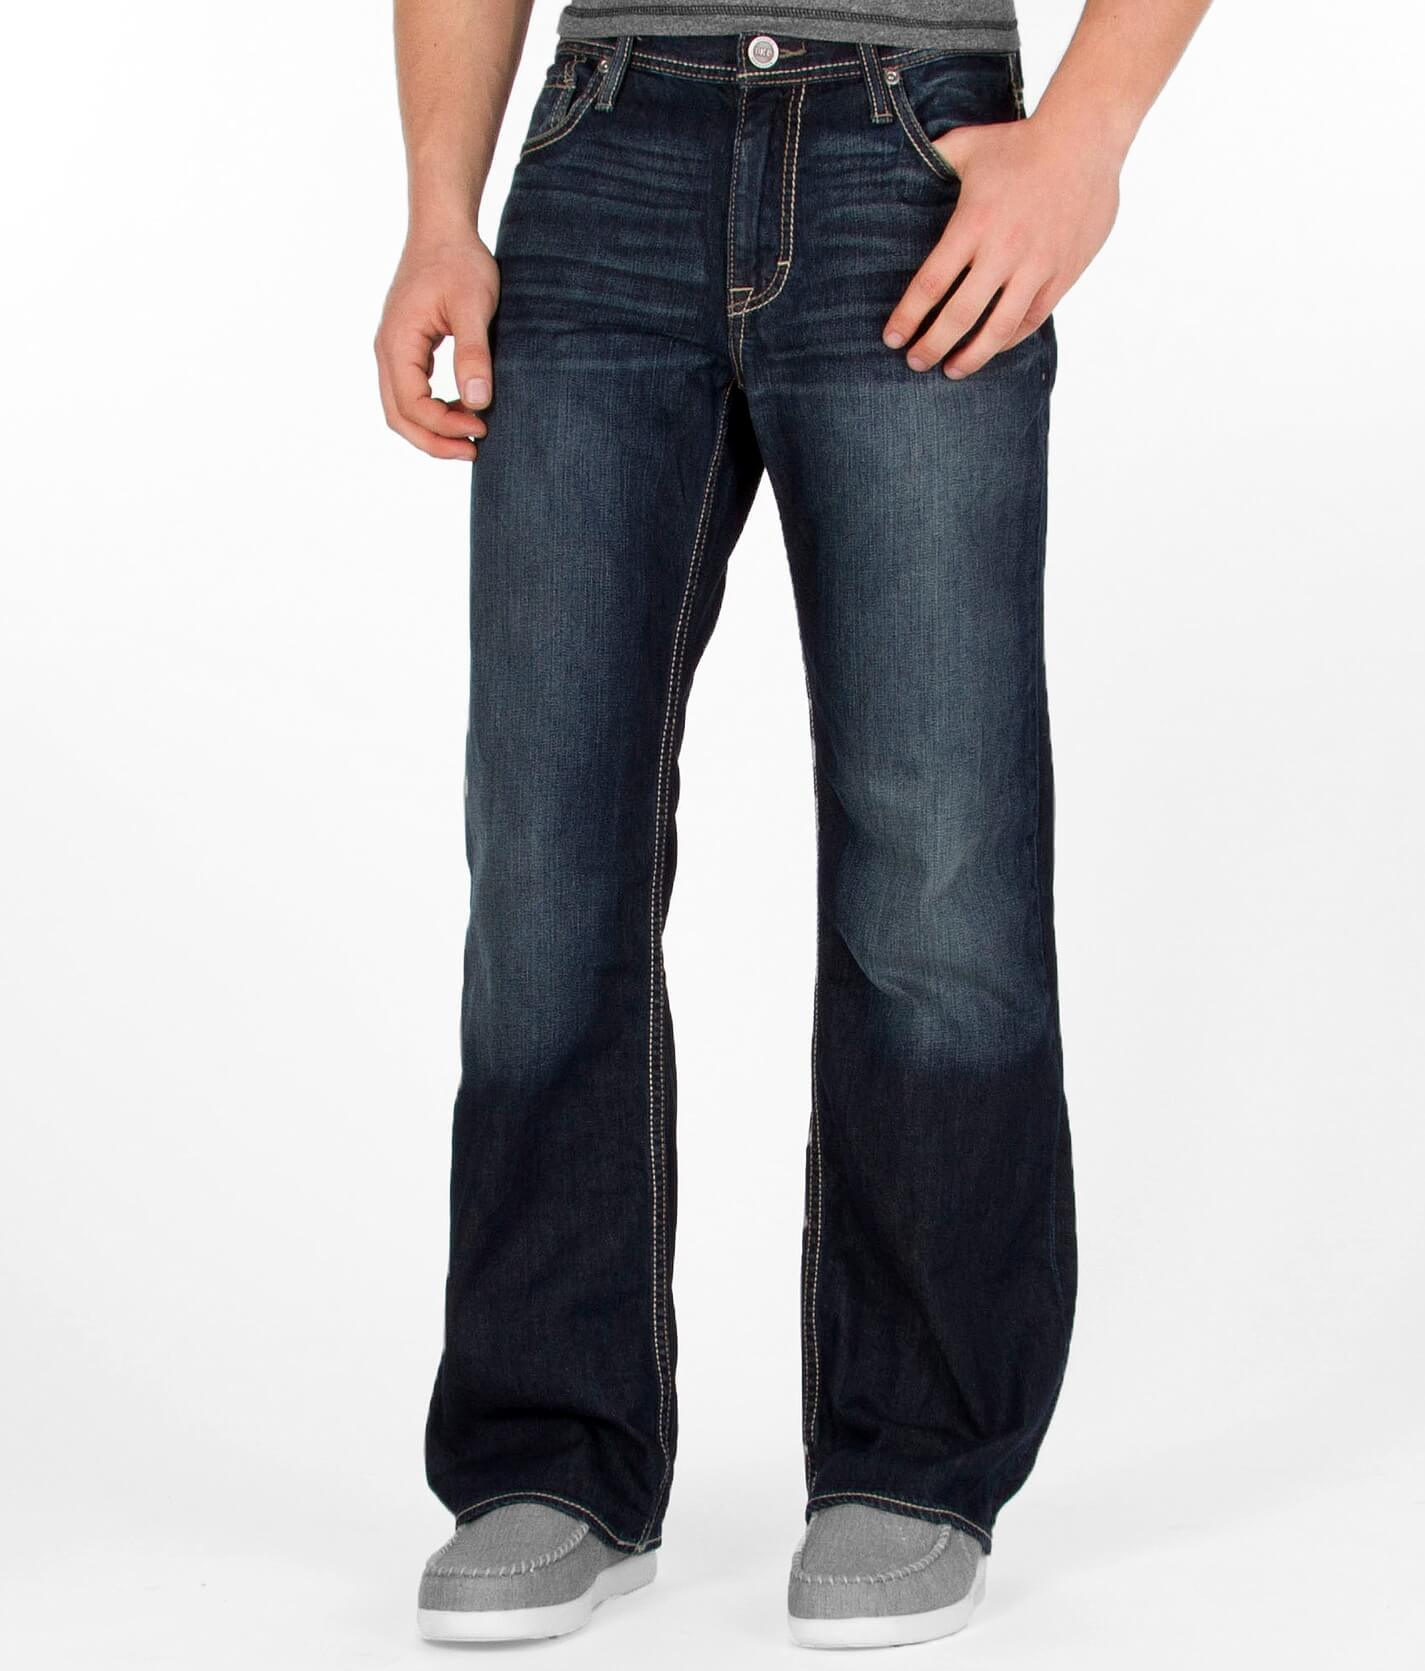 buckle tyler bootcut jeans